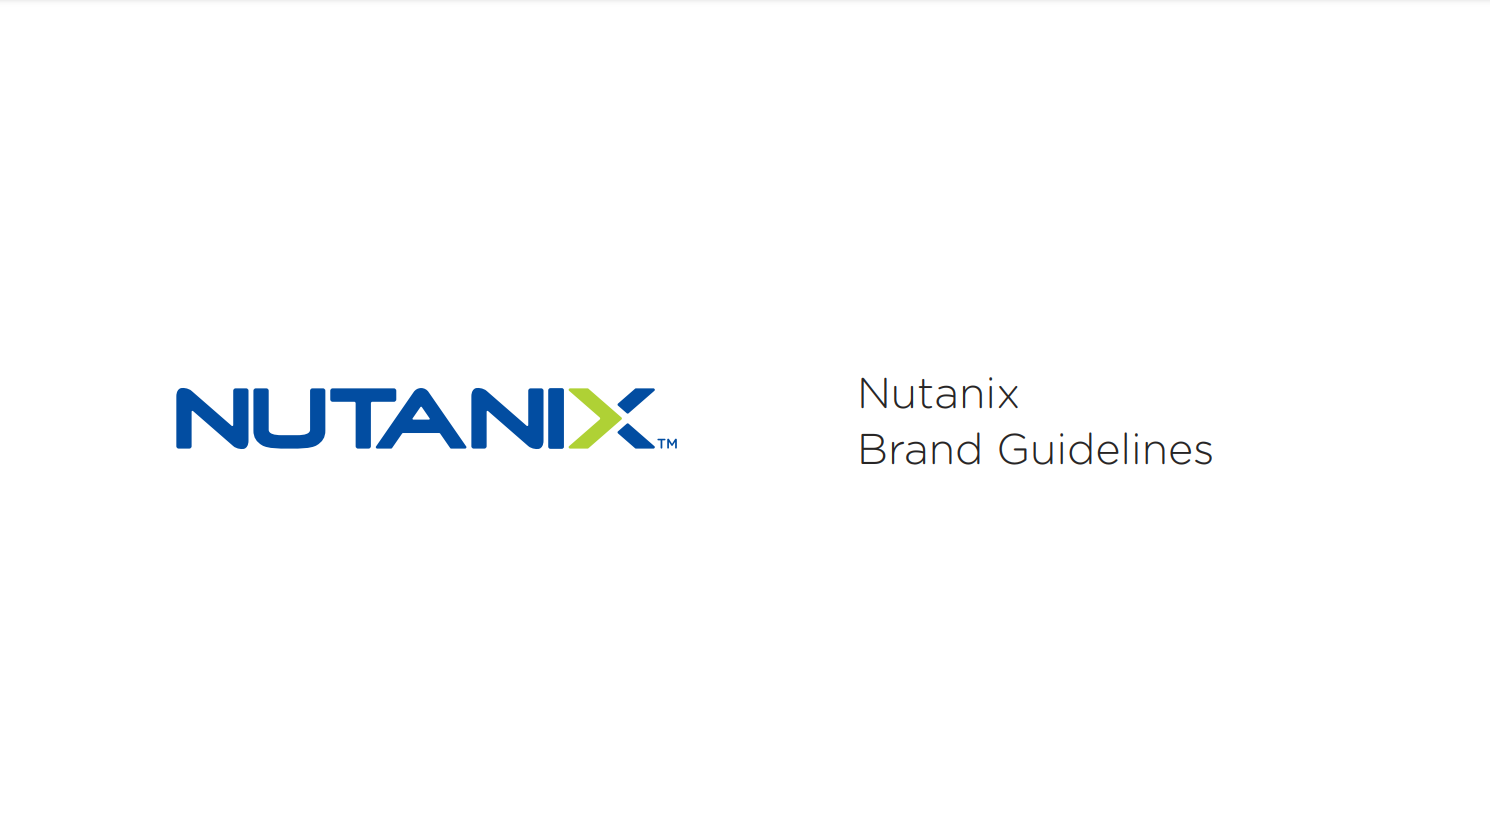 Nutanix's Brand Guide